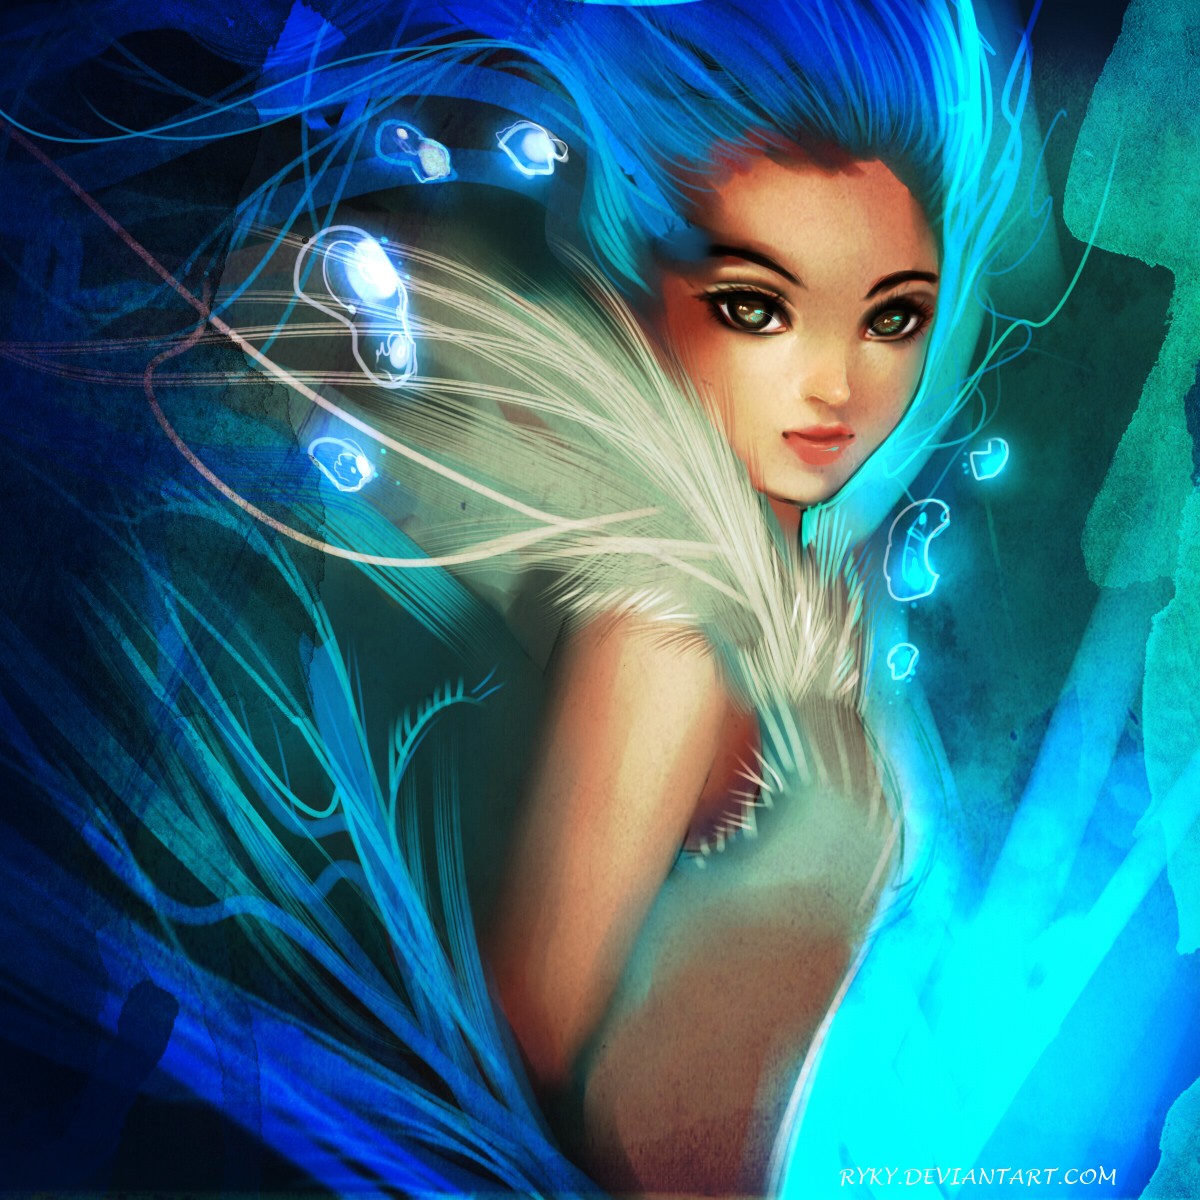 General 1200x1200 face artwork eyes blue hair blue cyan women long hair DeviantArt digital art watermarked